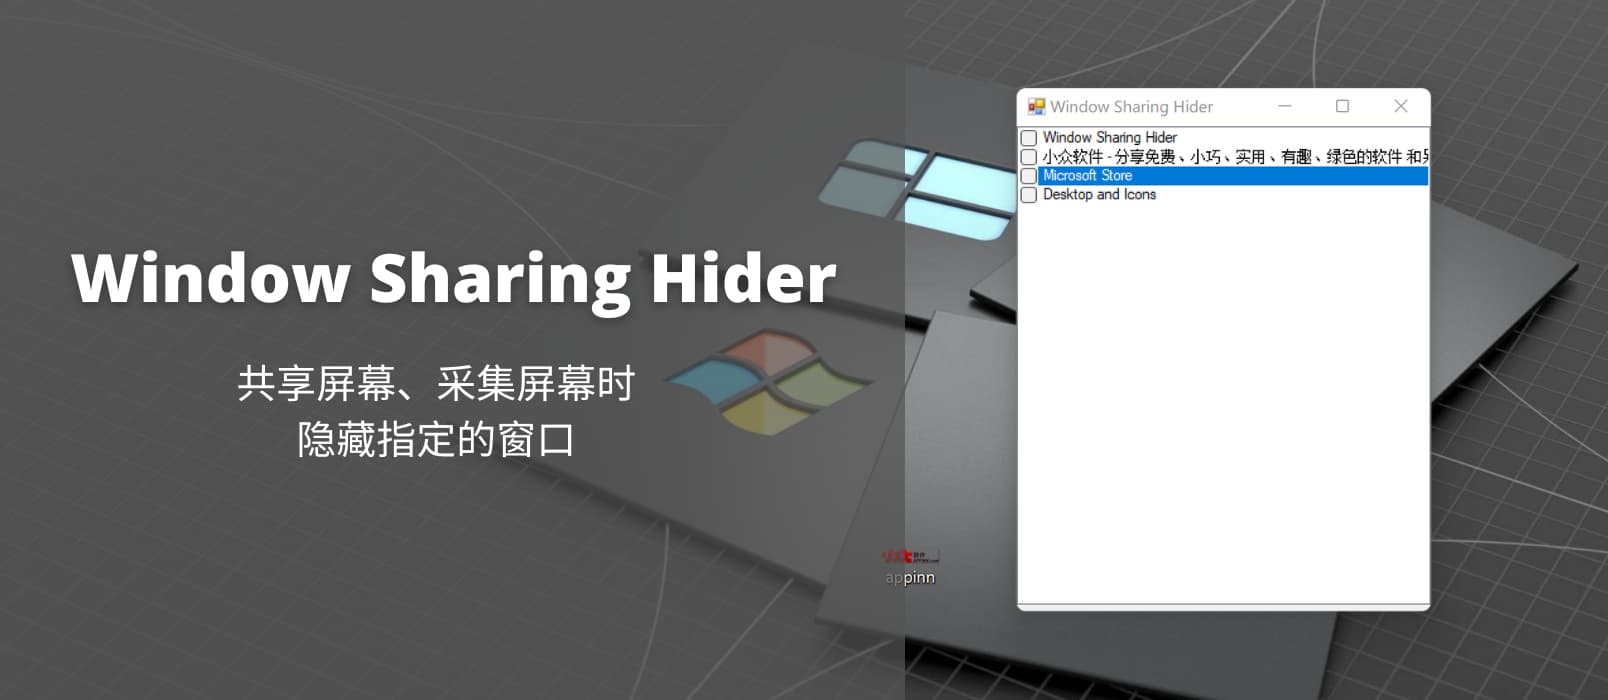 Window Sharing Hider - 共享屏幕、采集屏幕时隐藏指定的窗口[Windows]